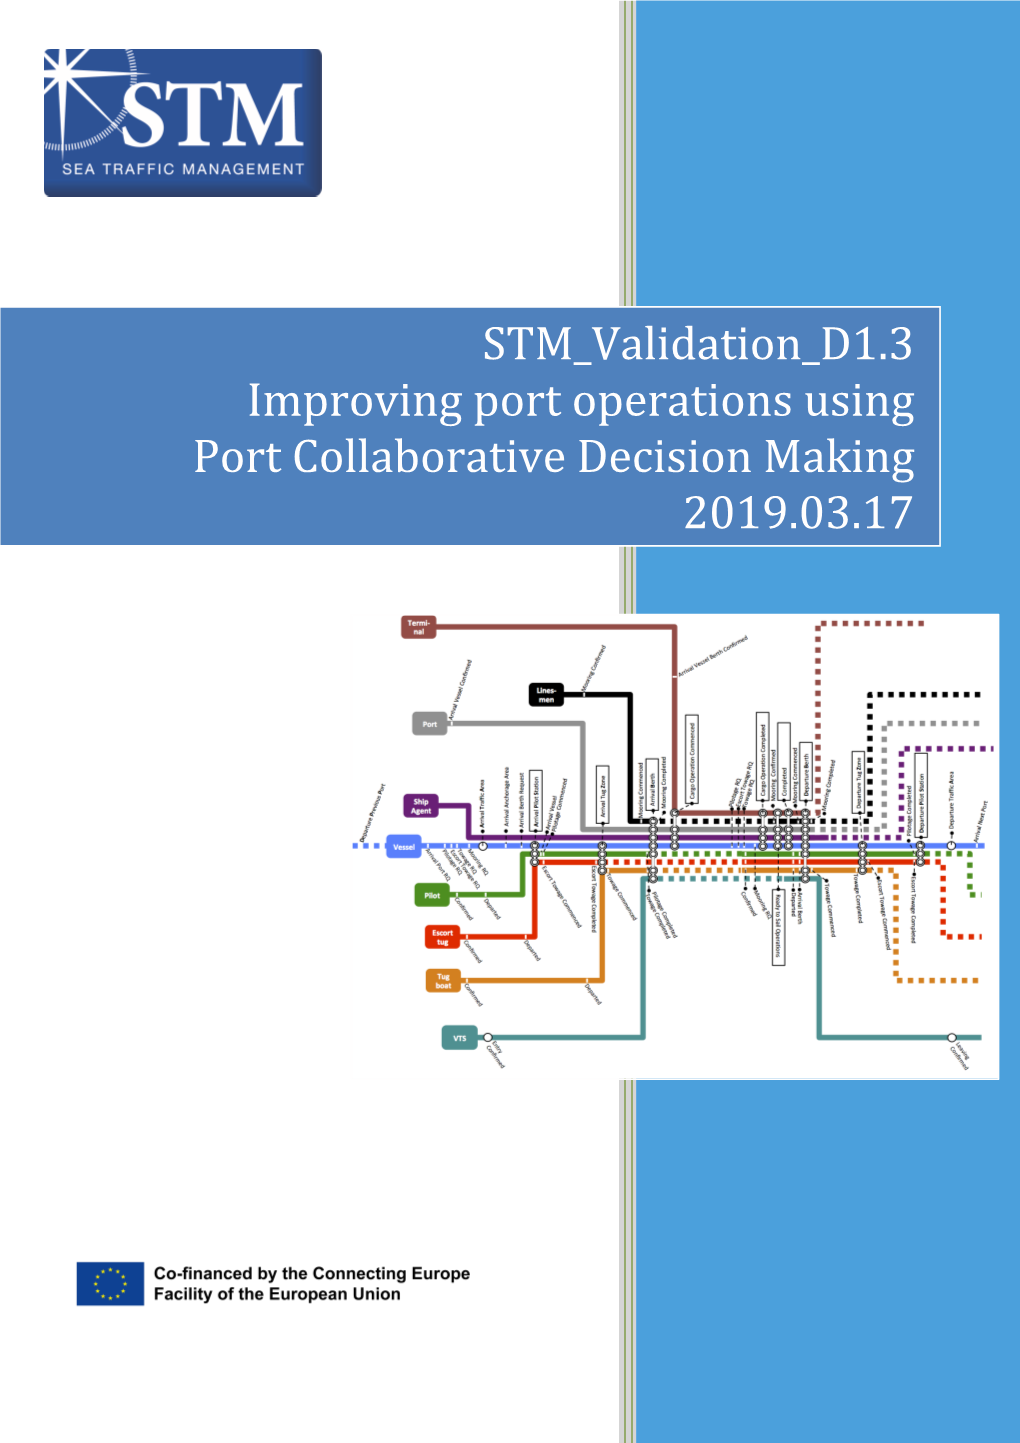 STM Validation D1.3 Improving Port Operations Using Port Collaborative Decision Making 2019.03.17